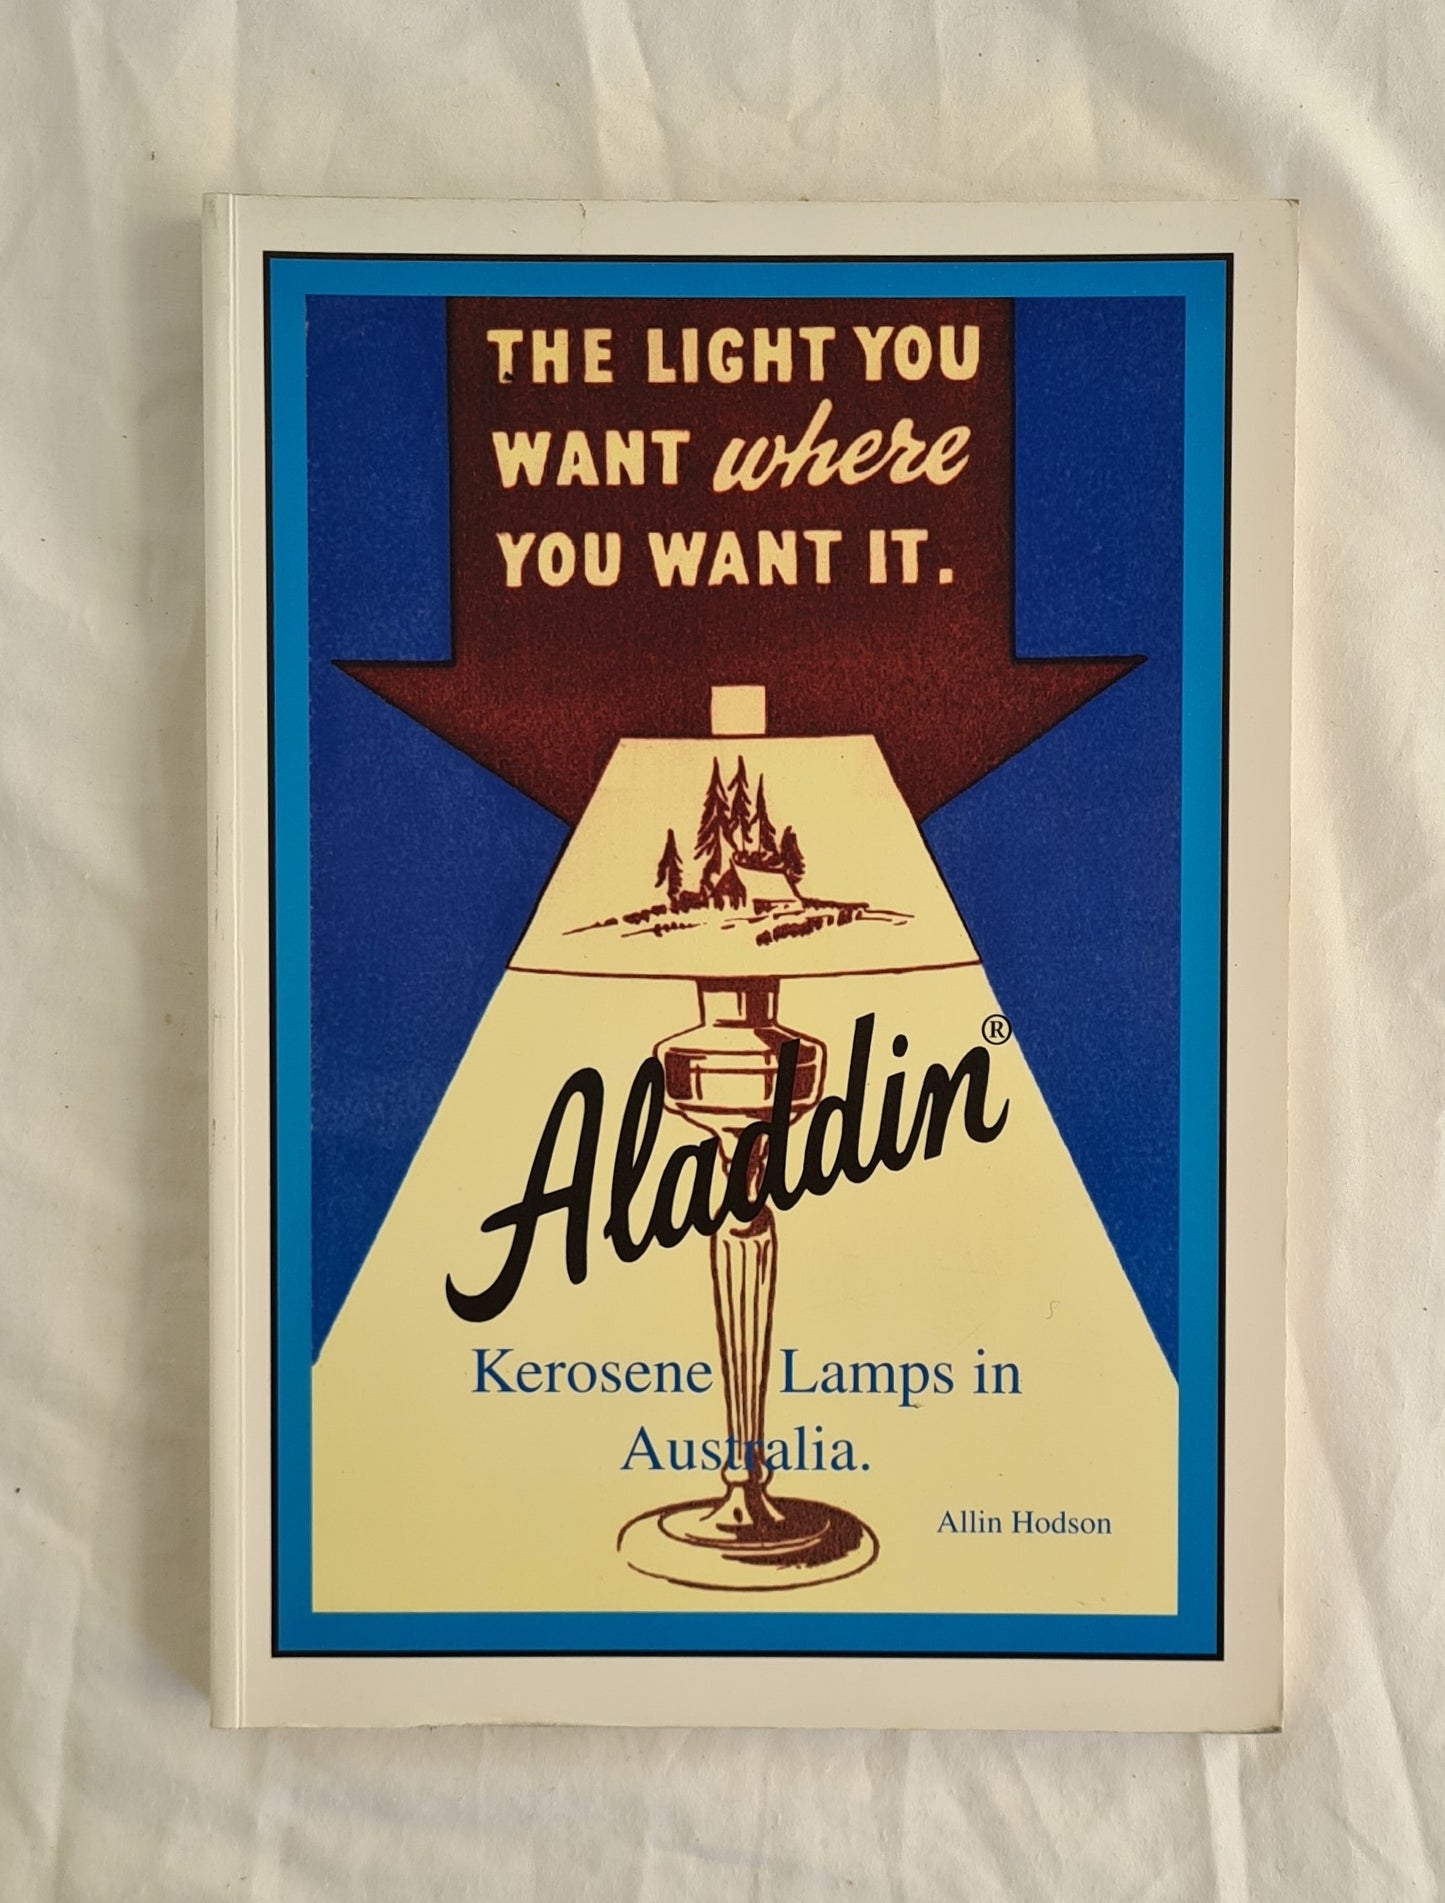 Aladdin Kerosene Lamps in Australia by Allin Hodson